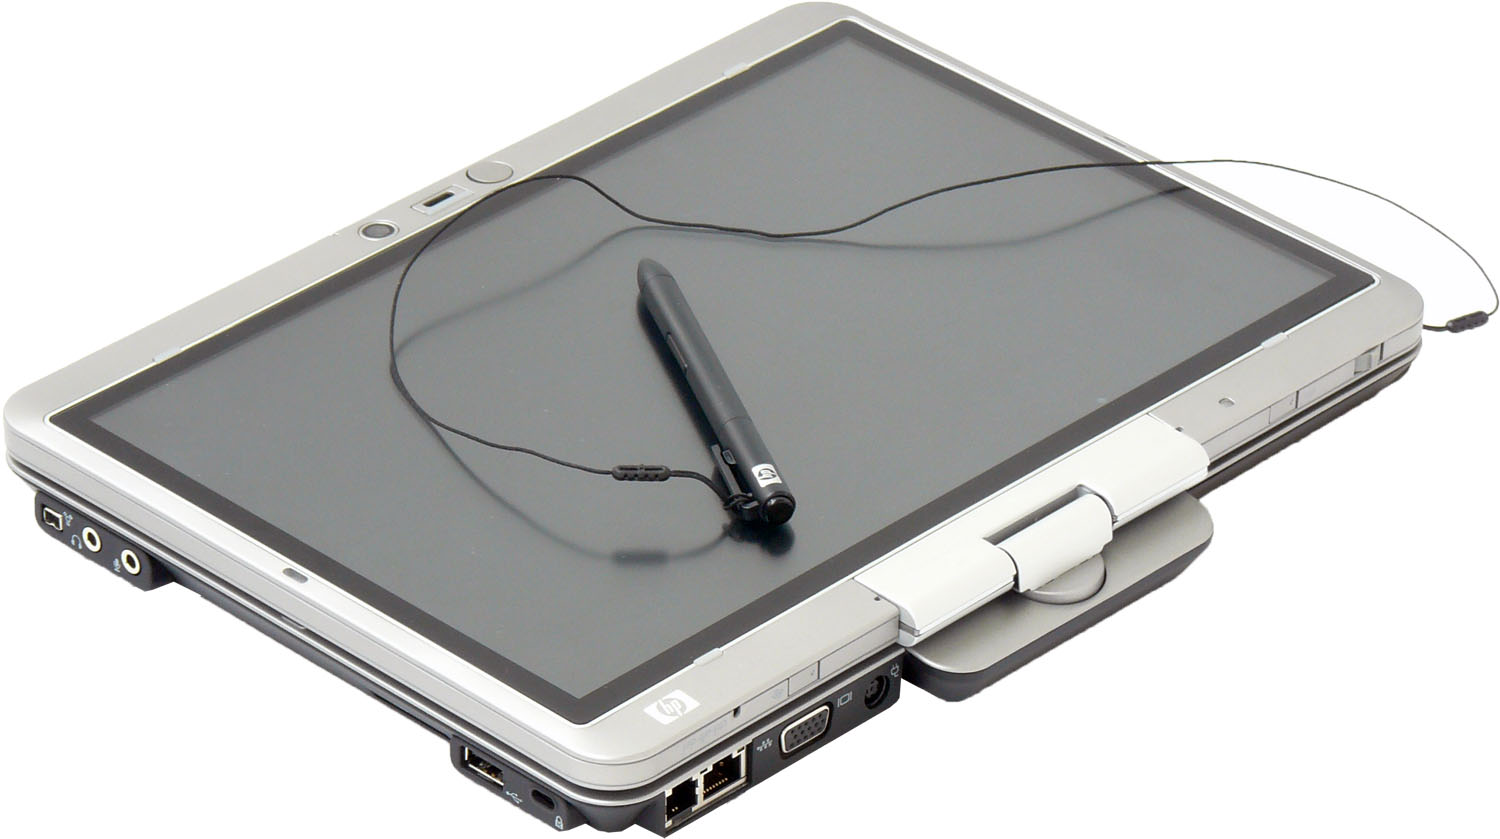 HP EliteBook 2730p - tablet pro náročné